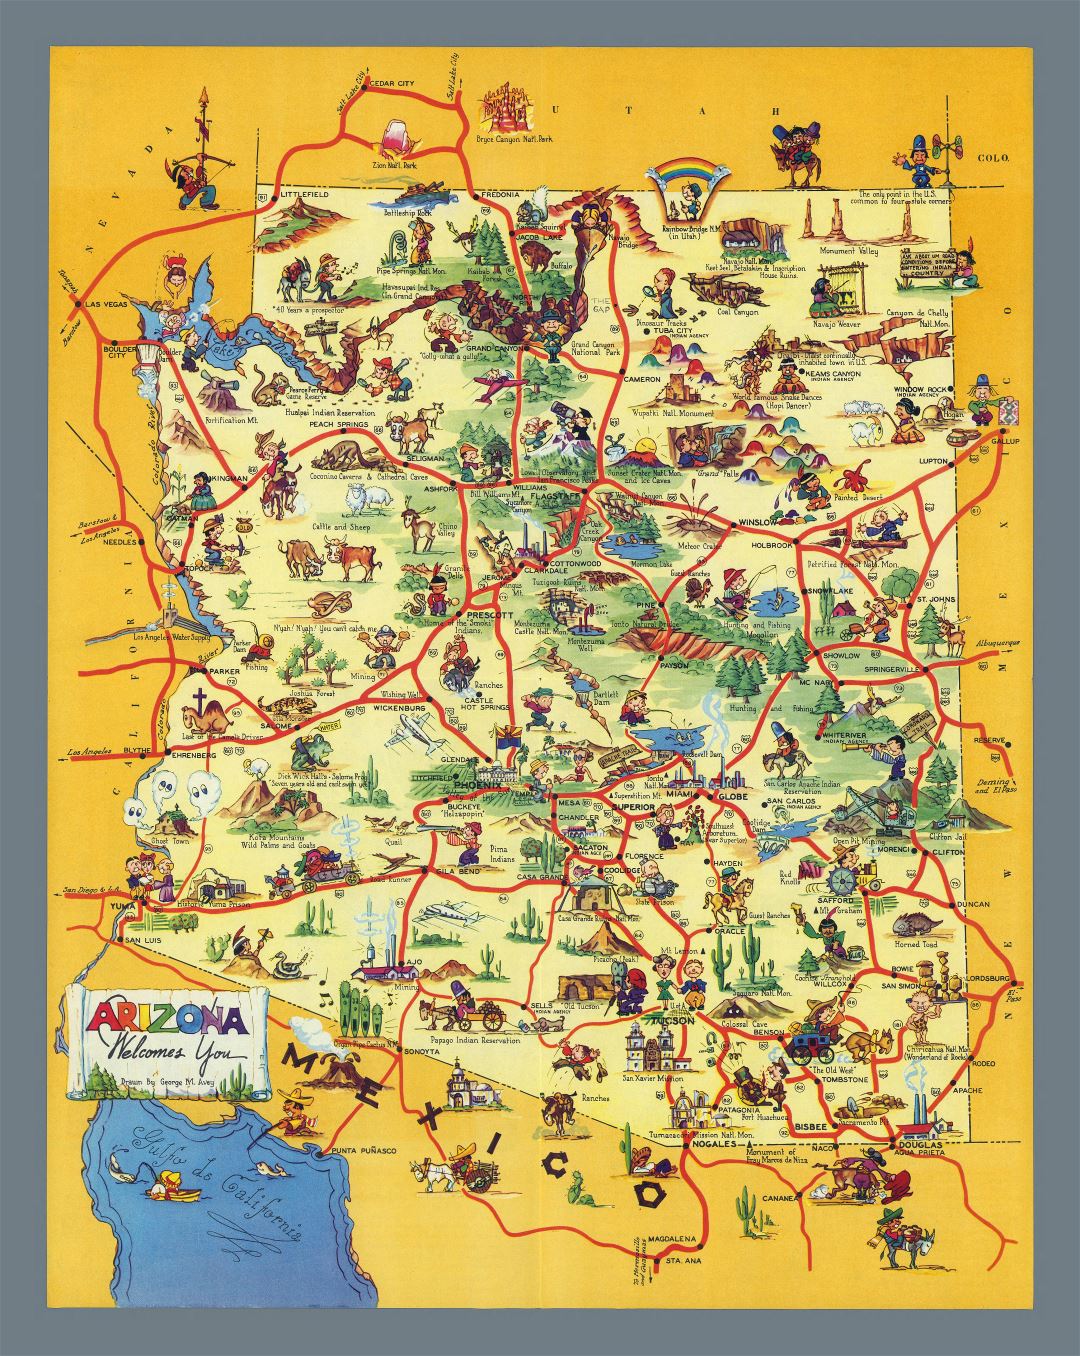 Large scale tourist illustrated map of Arizona state